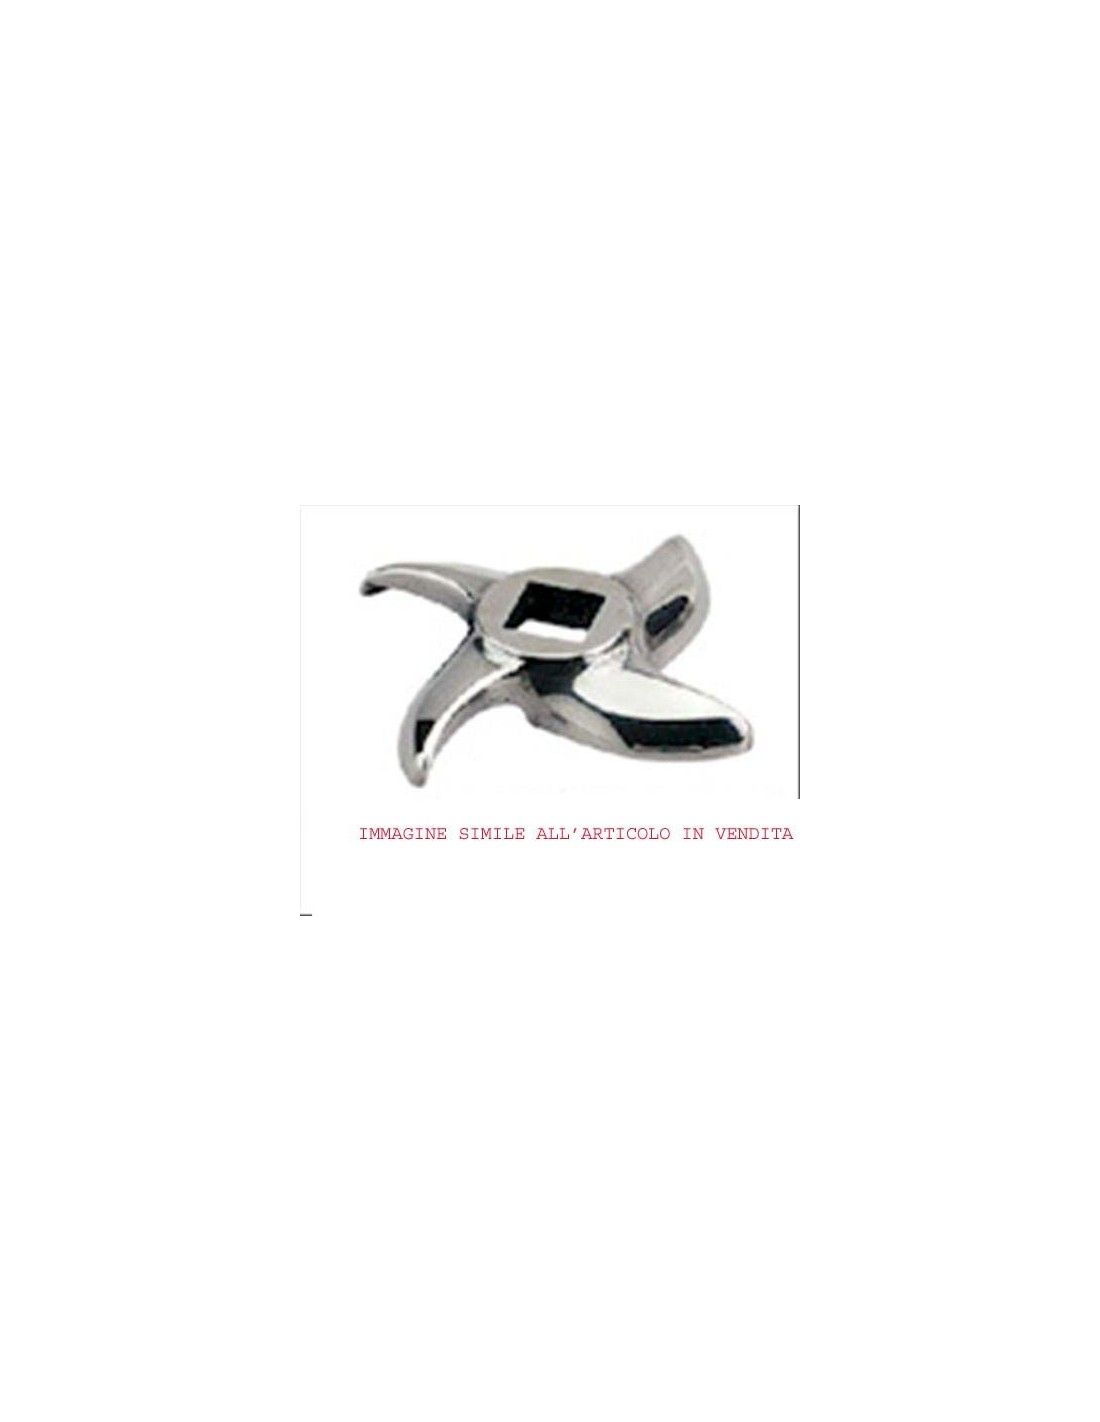 Cuchillas de acero inoxidable autoafilables (empresa) para picadora mod. 22